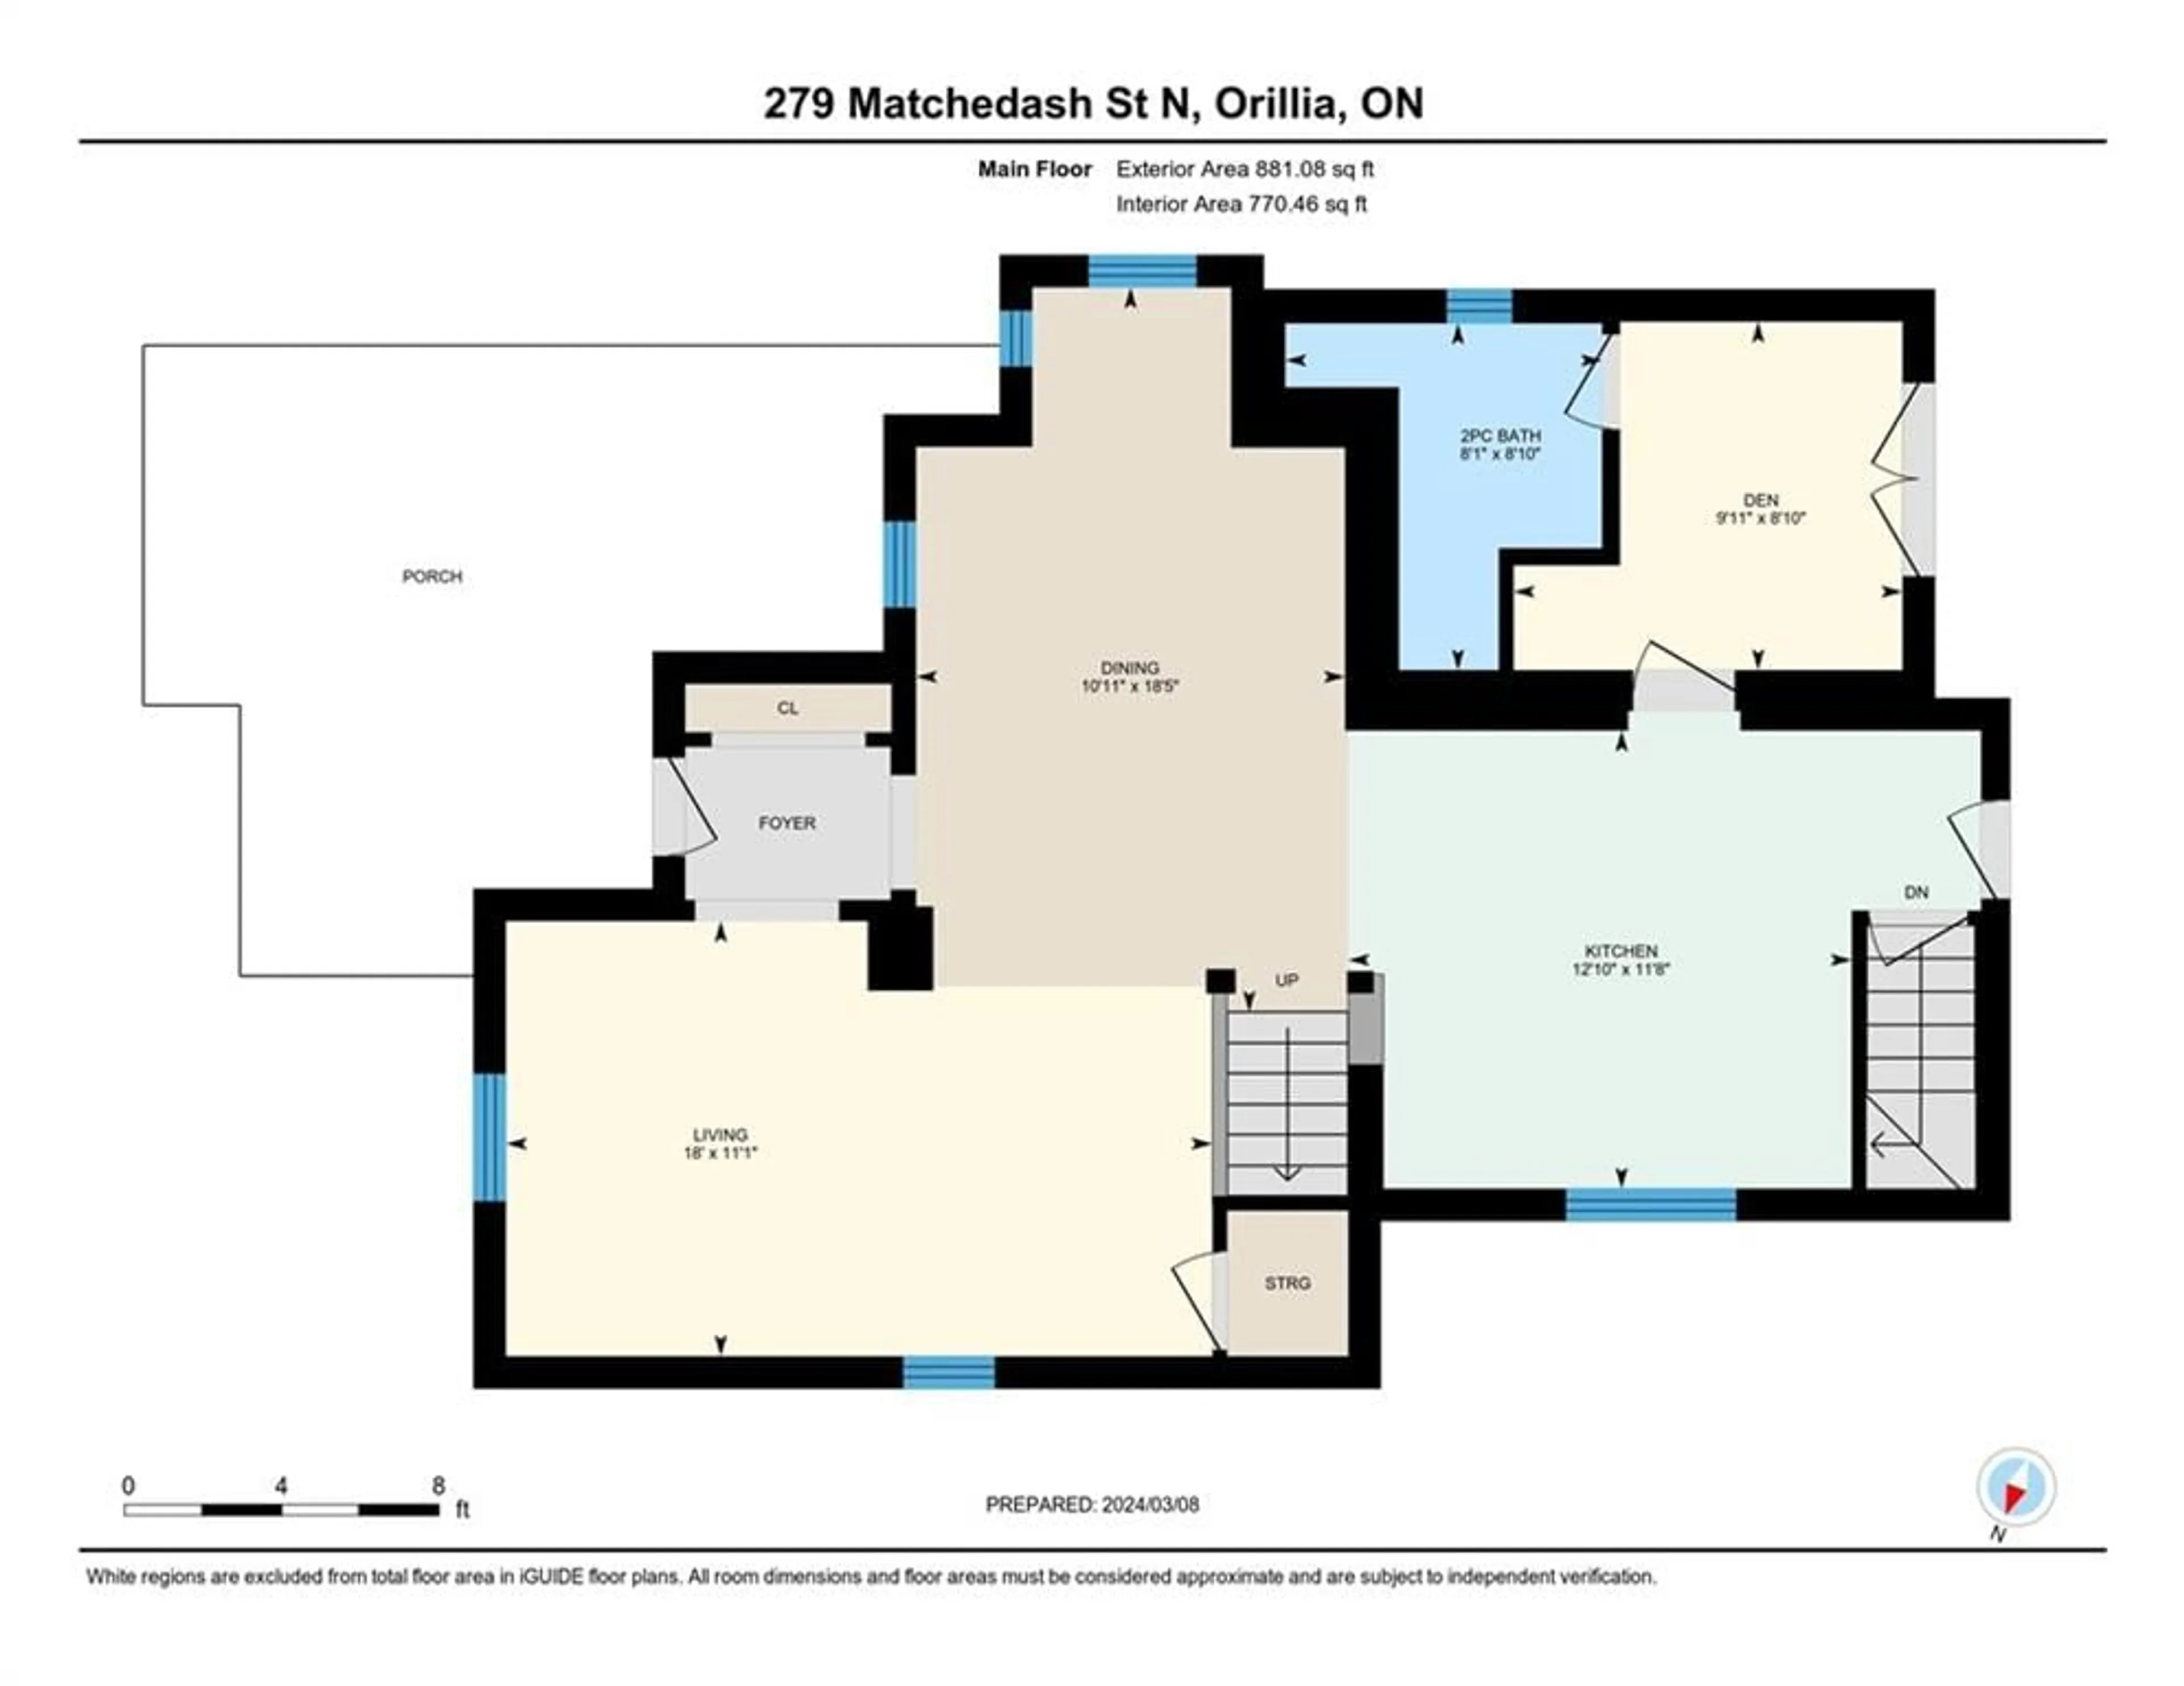 Floor plan for 279 Matchedash St, Orillia Ontario L3V 4V8